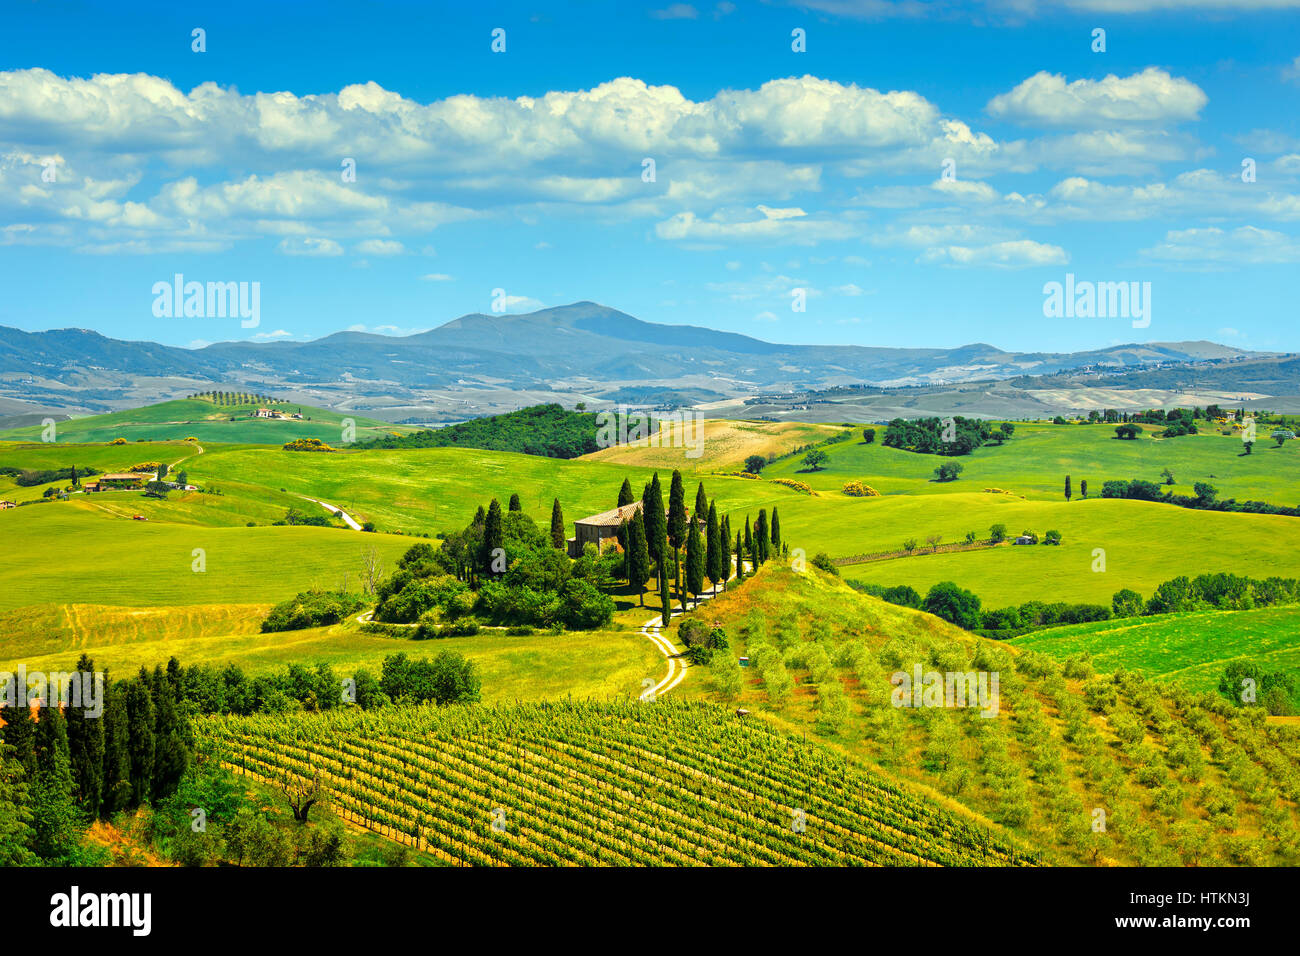 Toskana, Ackerland und Zypresse Bäume Land Landschaft, grüne Felder. Italien, Europa. Stockfoto